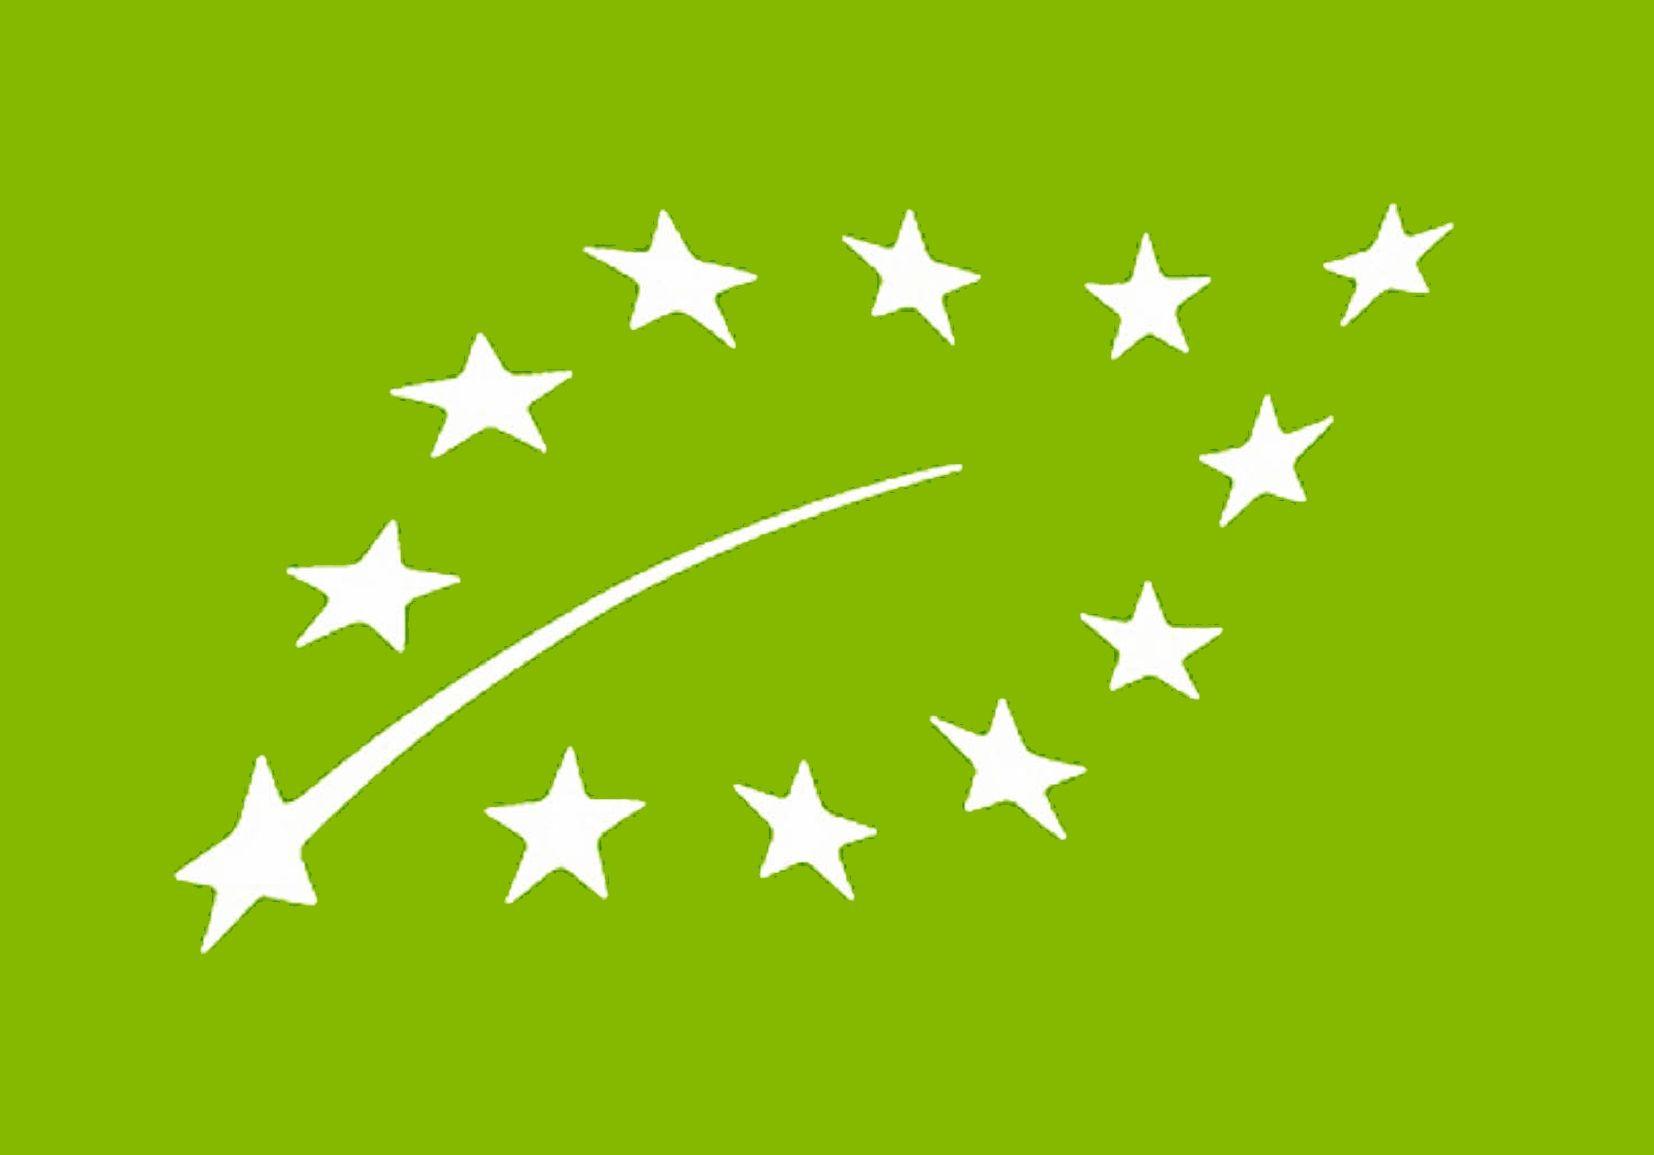 Rolnictwo ekologiczne - European Commission.